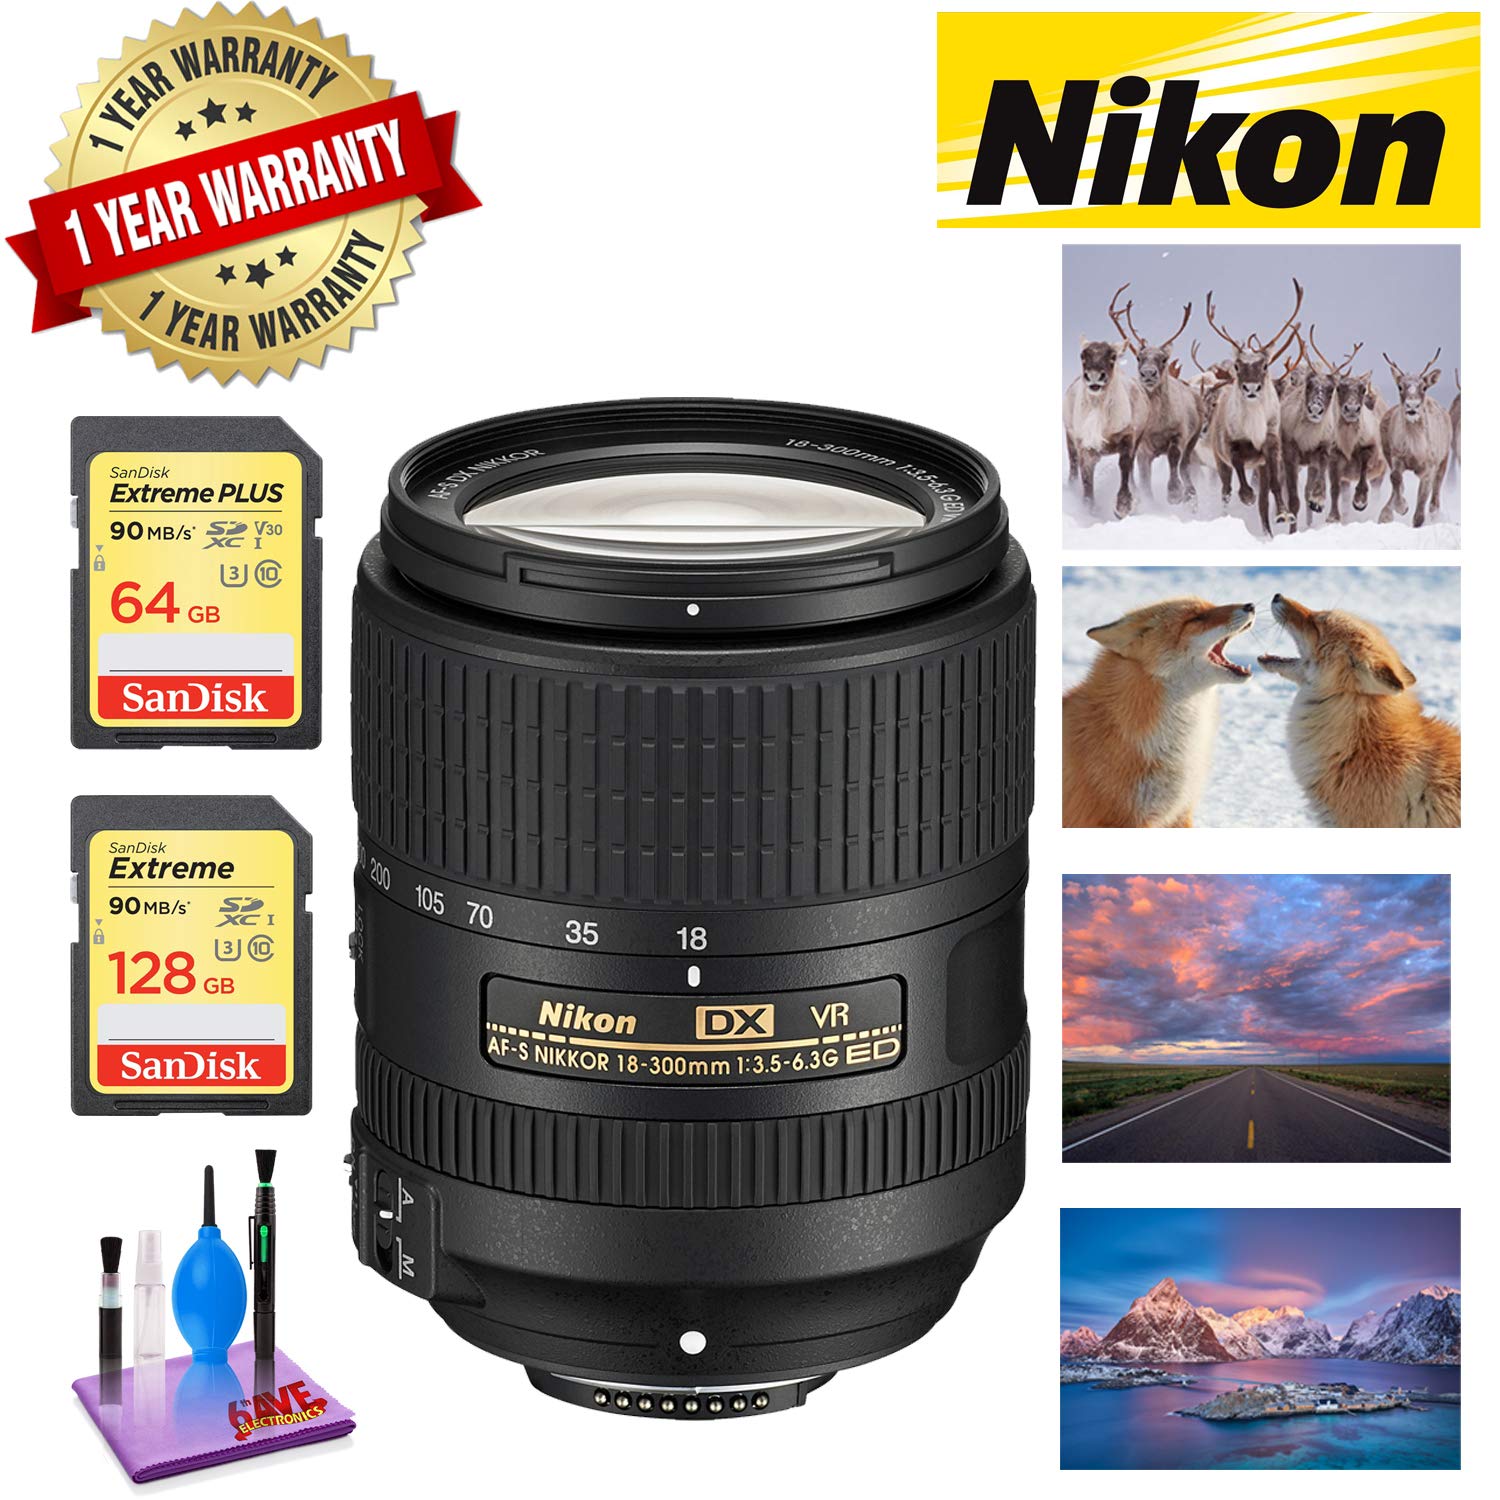 NIKON 18-300MM F/3.5-6.3G ED AF-S DX VR Lens with 1 Year Warranty Sandisk 64GB and 128GB Extreme Memory Card SDXCUHS-I Bundle